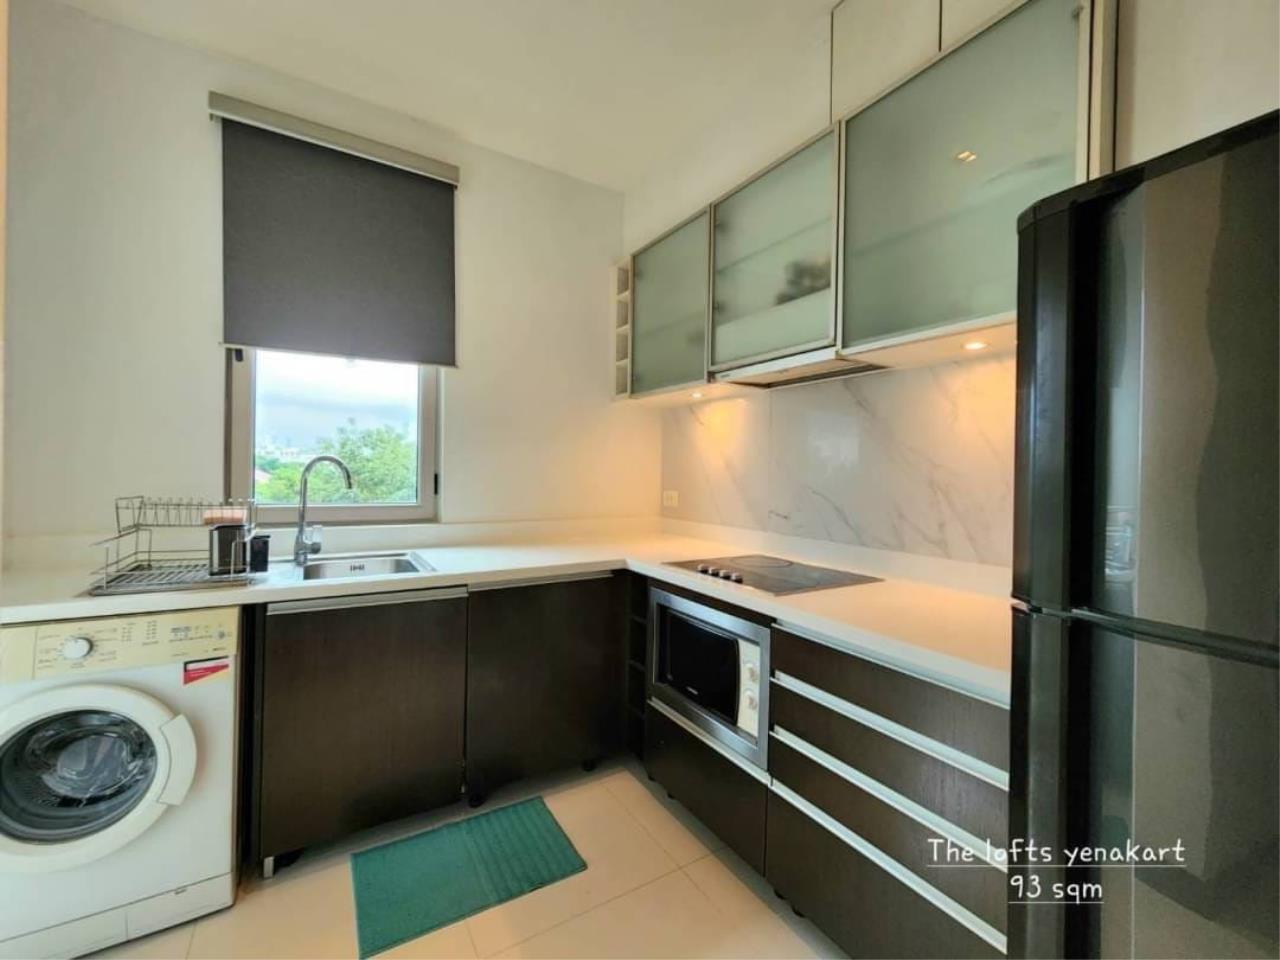 2 Bedrooms 2 Bathrooms Size 93sqm. The Lofts Yen Akat for Rent